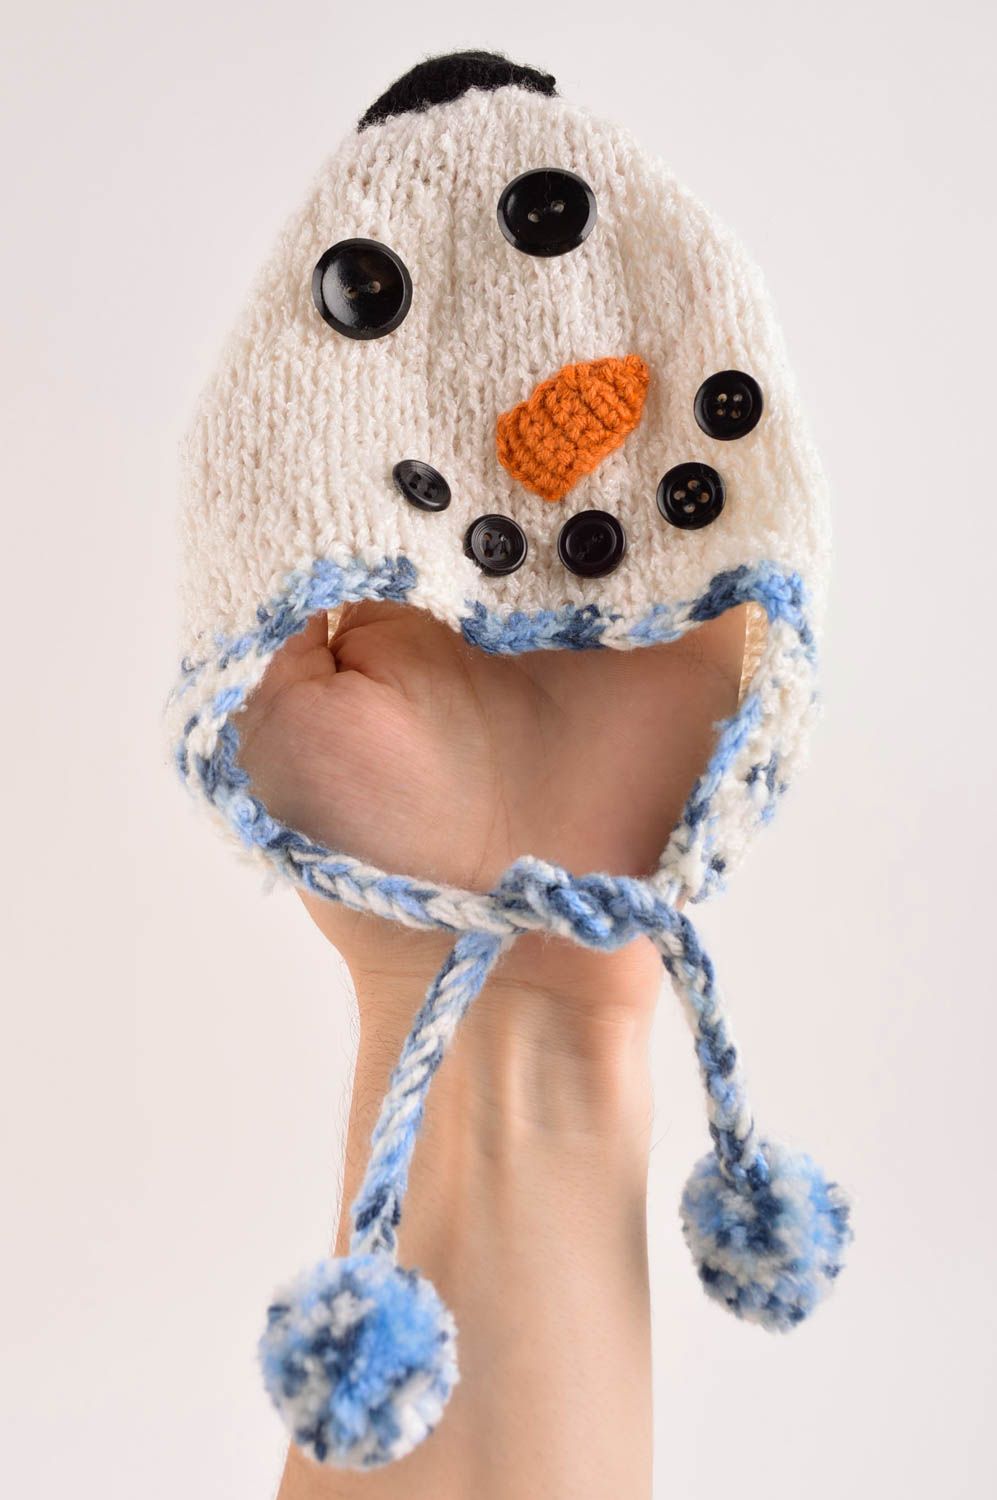 Handmade winter hat designer hat for baby unusual crochet hat gift ideas photo 4